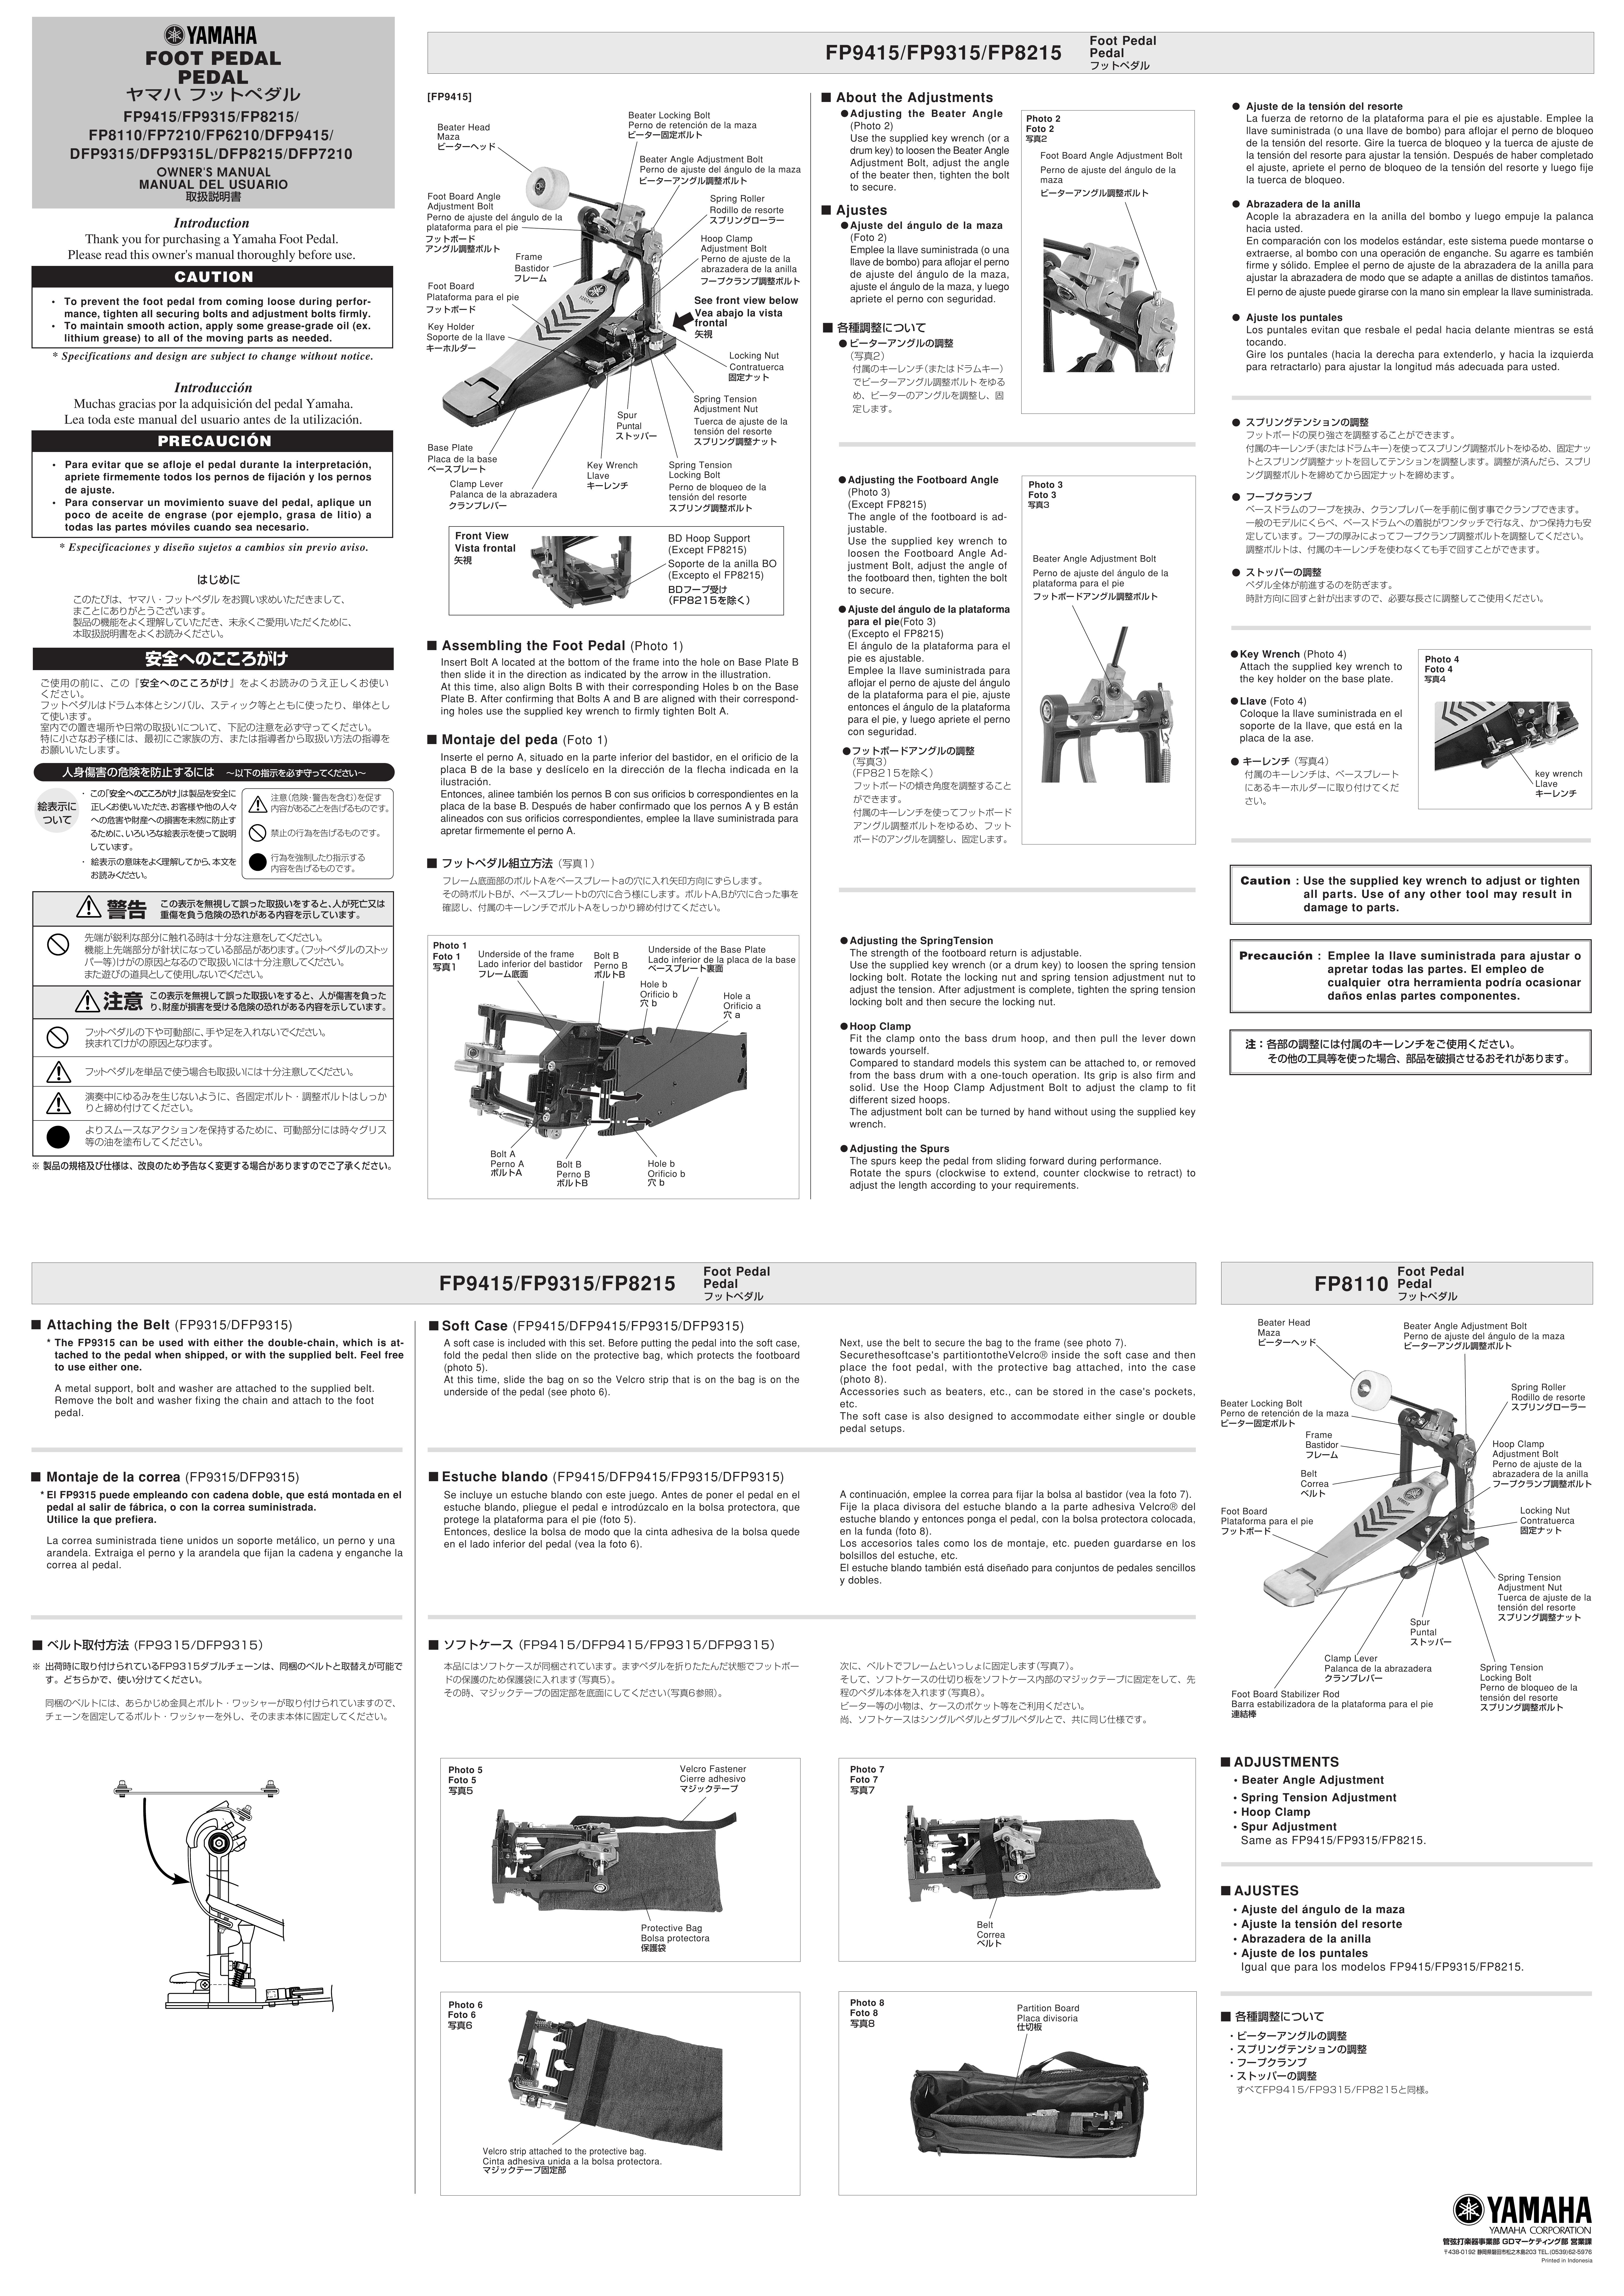 Yamaha FP6210 Music Pedal User Manual